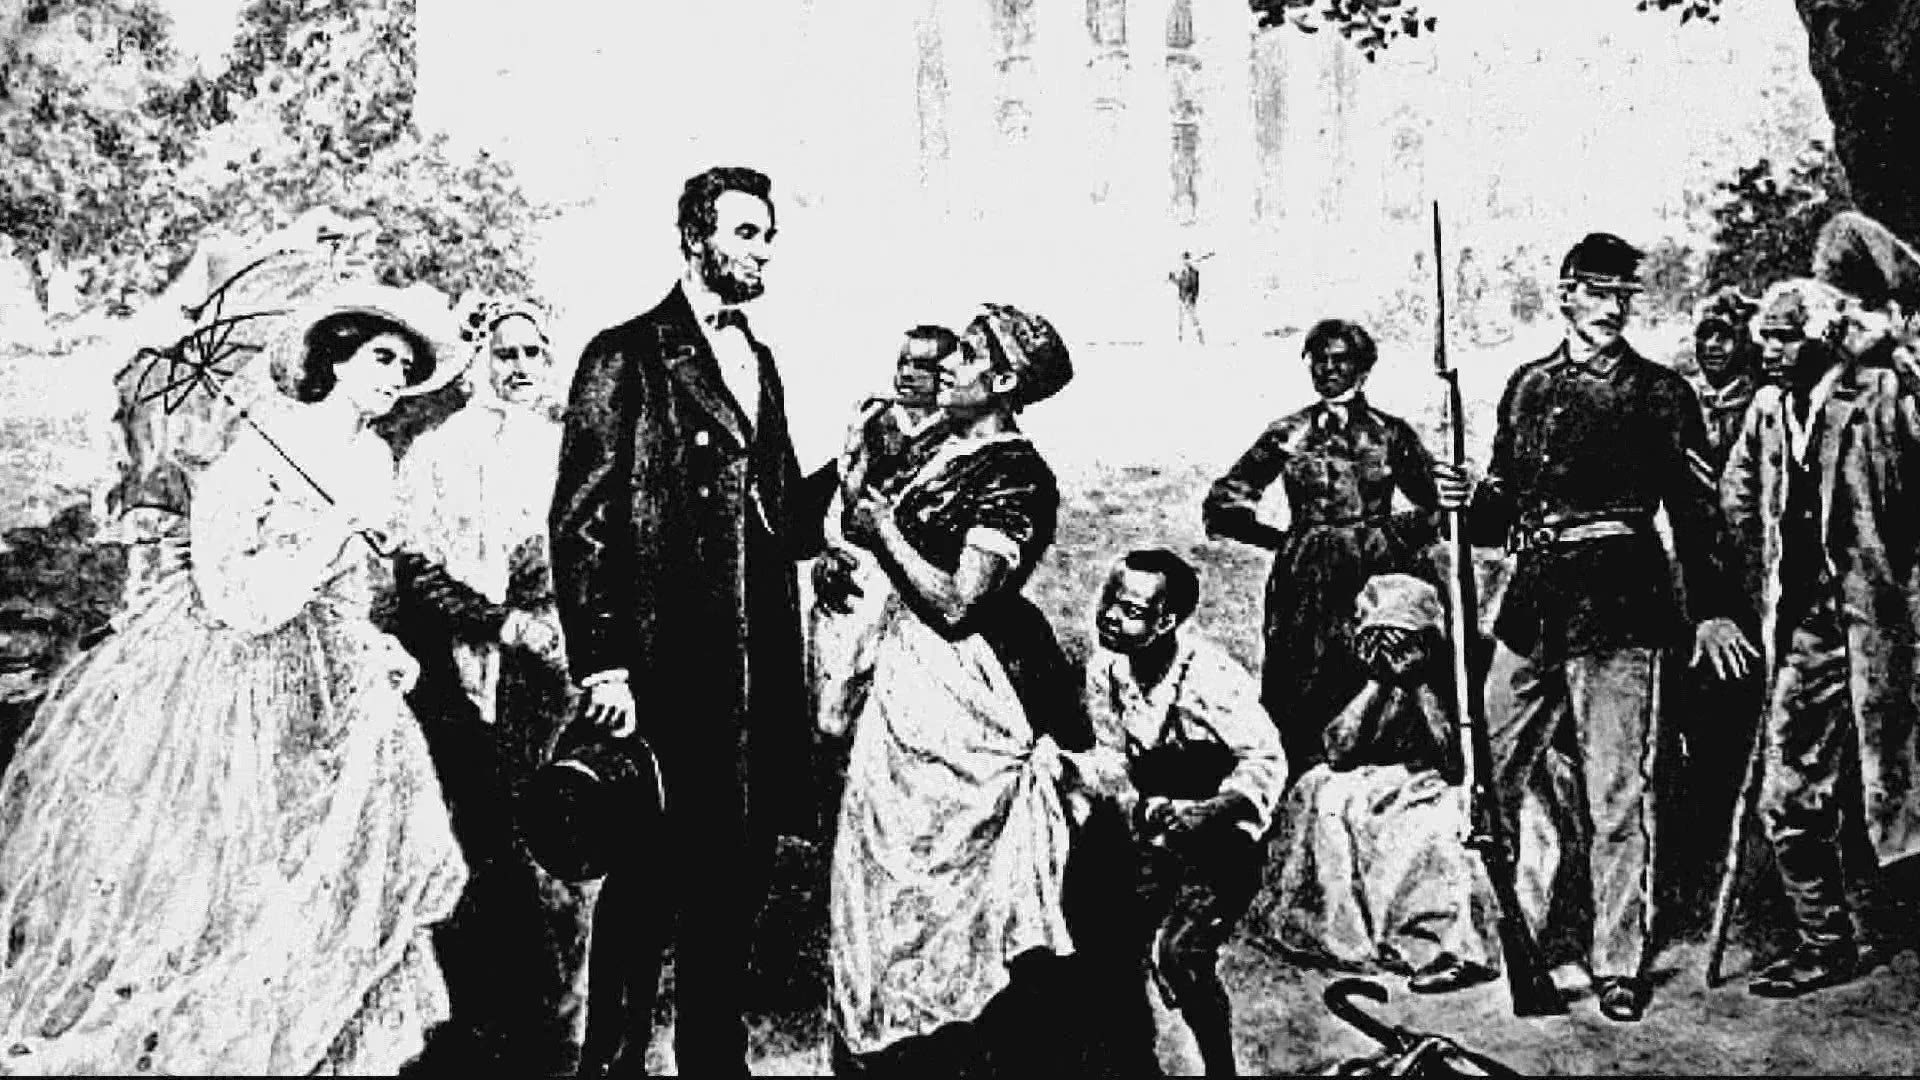 Celebrating Emancipation Day in DC